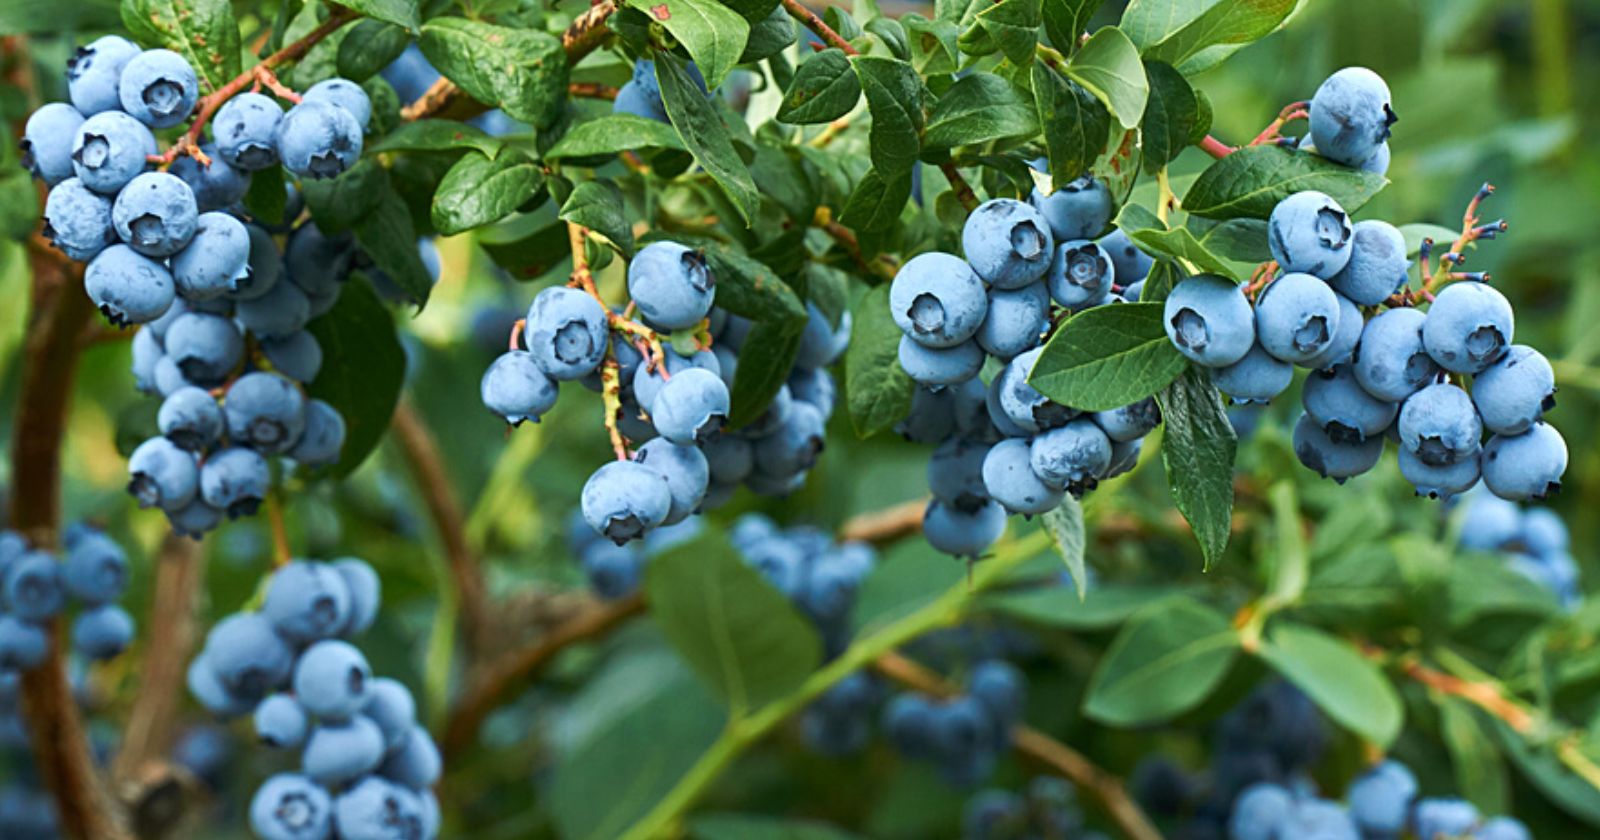 How To Grow Blueberries In Your Garden?